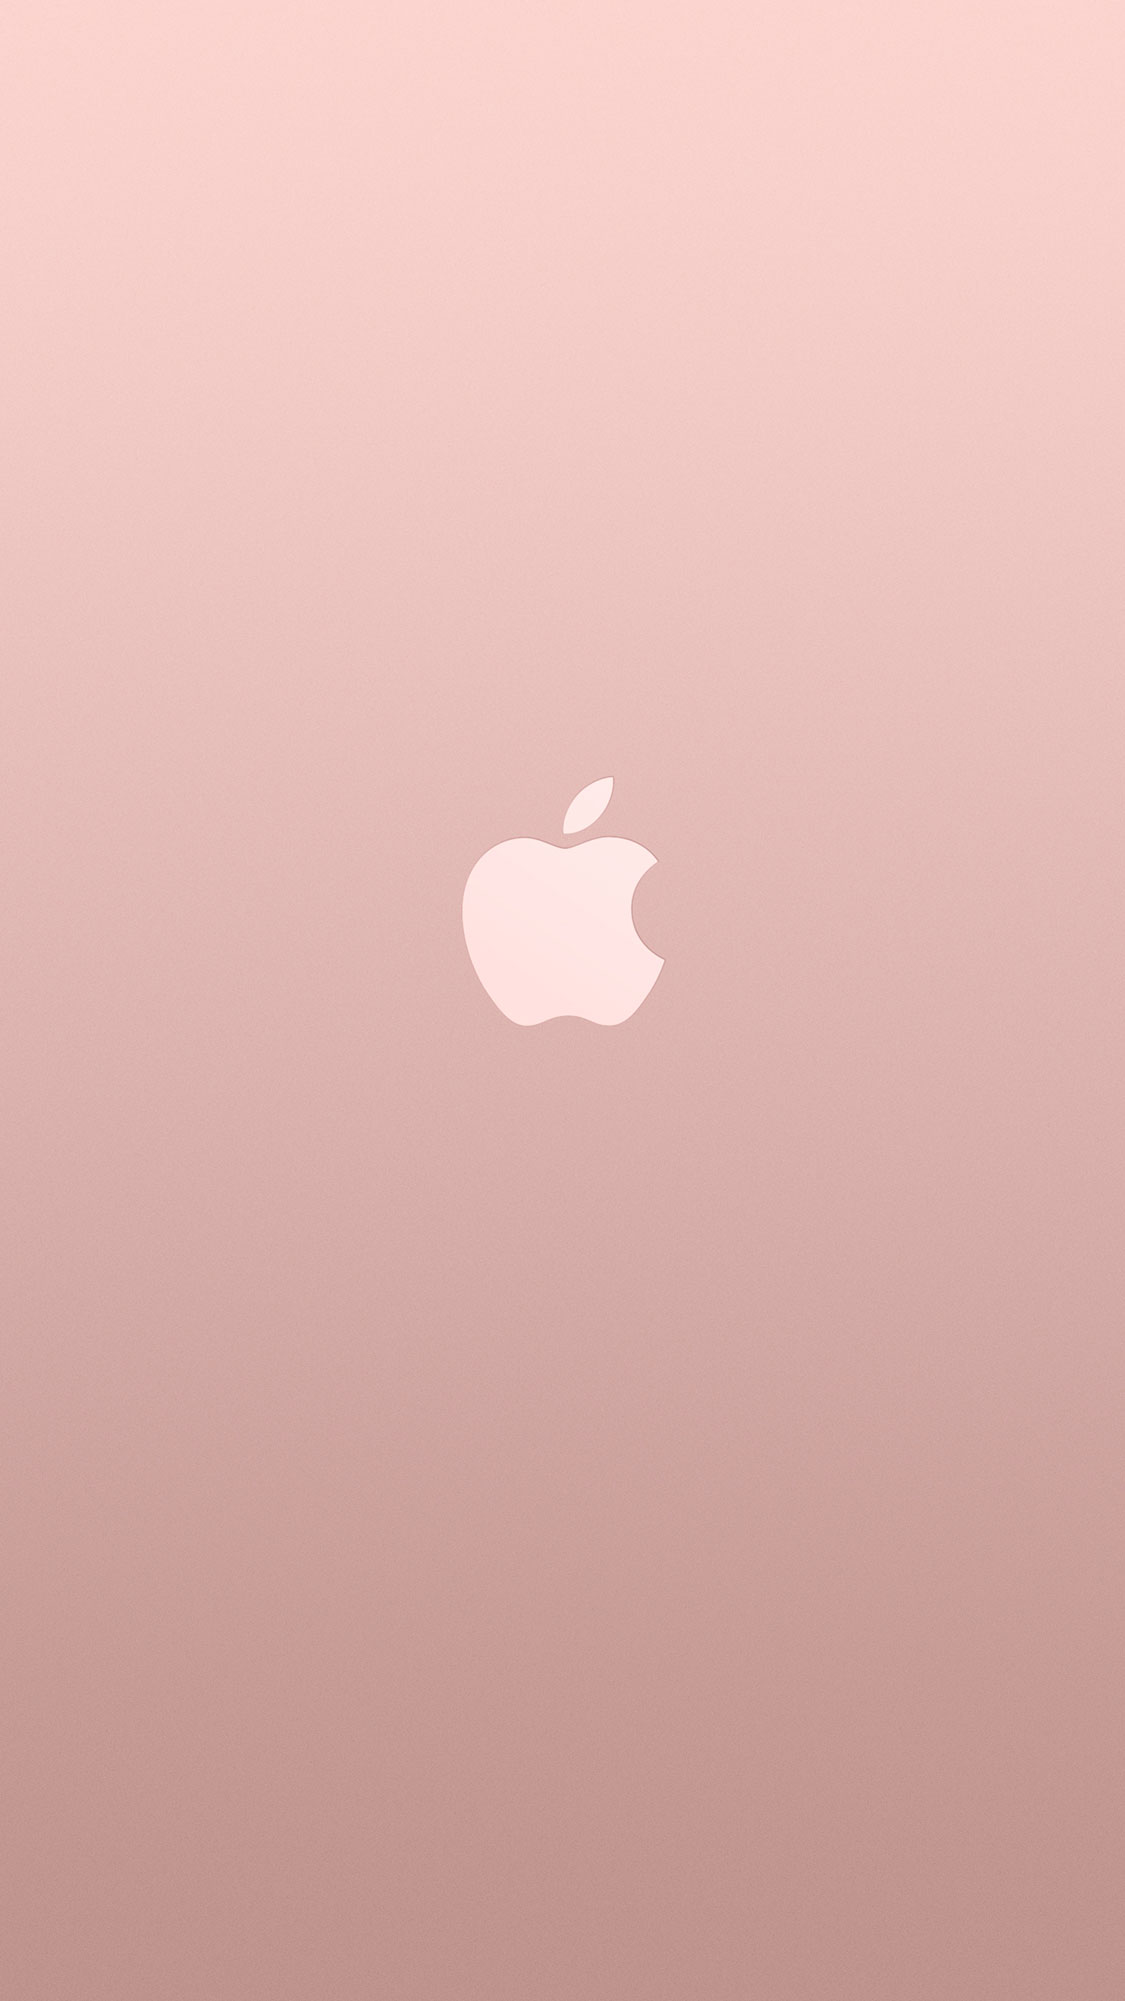 Rose Gold Apple iPhone 6s wallpaper HDjpg 11252001 iPHONE